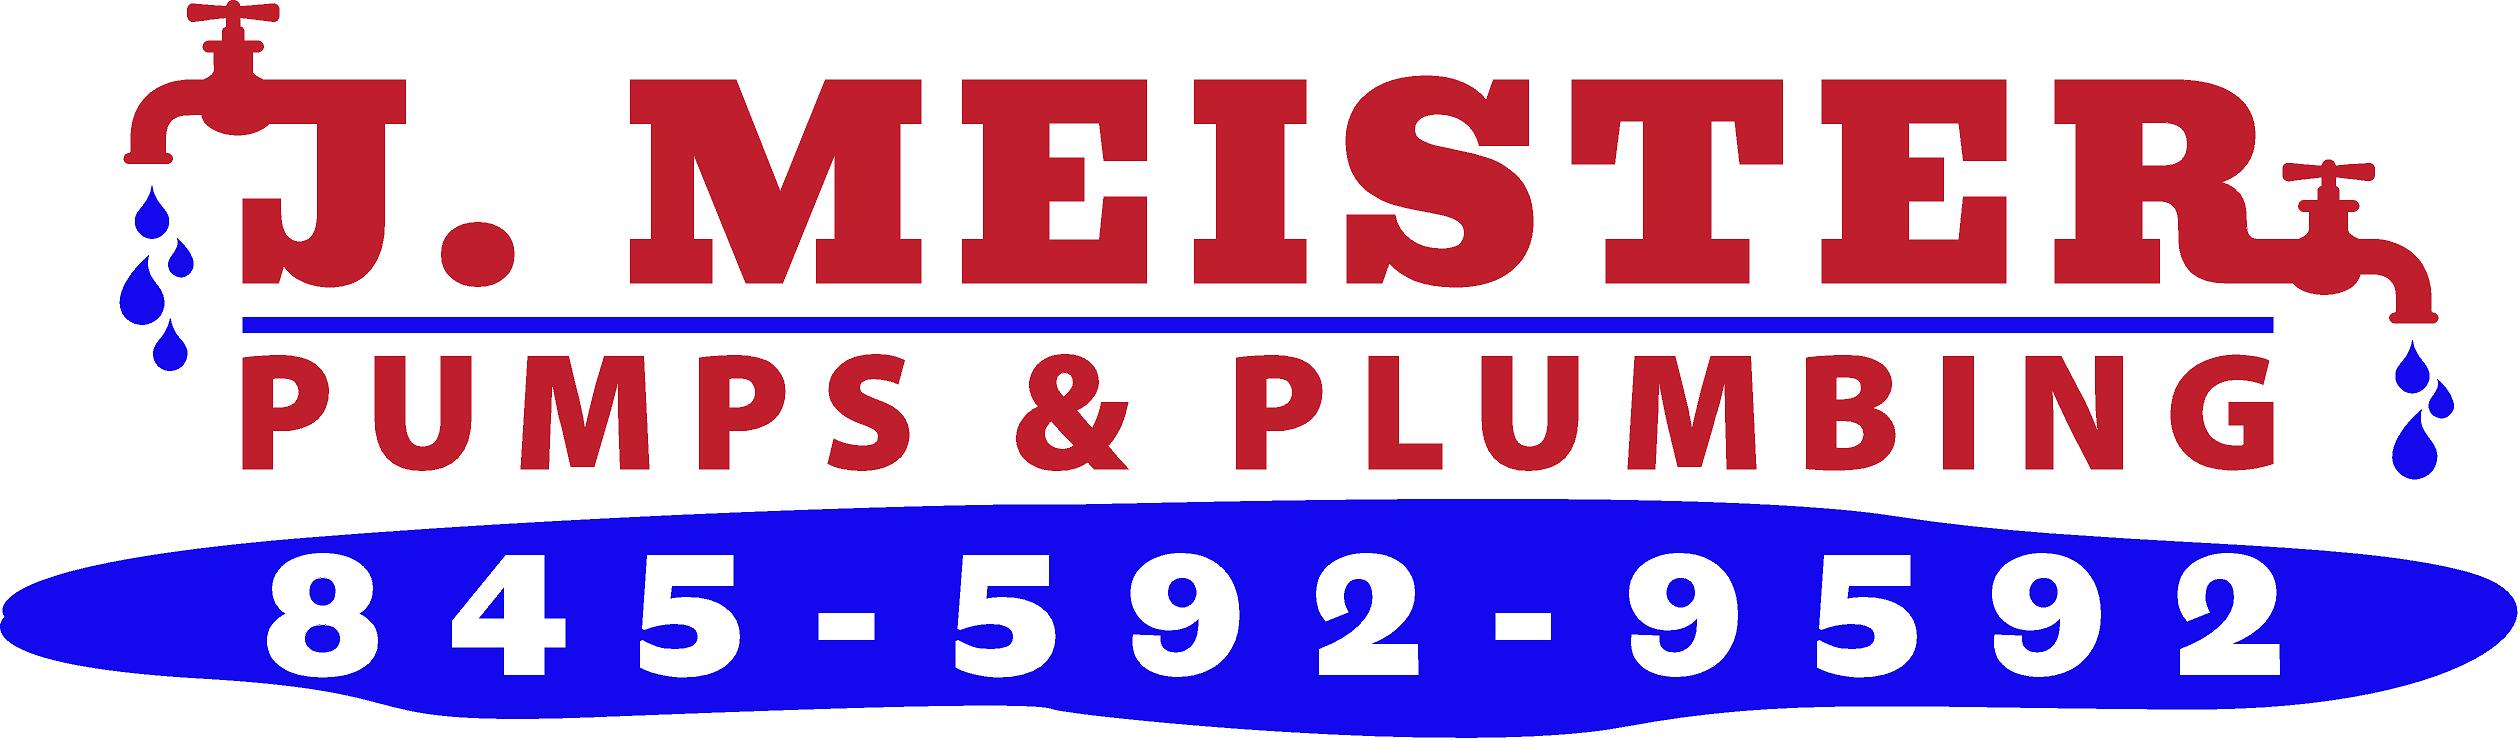 J. Meister Pumps & Plumbing, LLC Logo